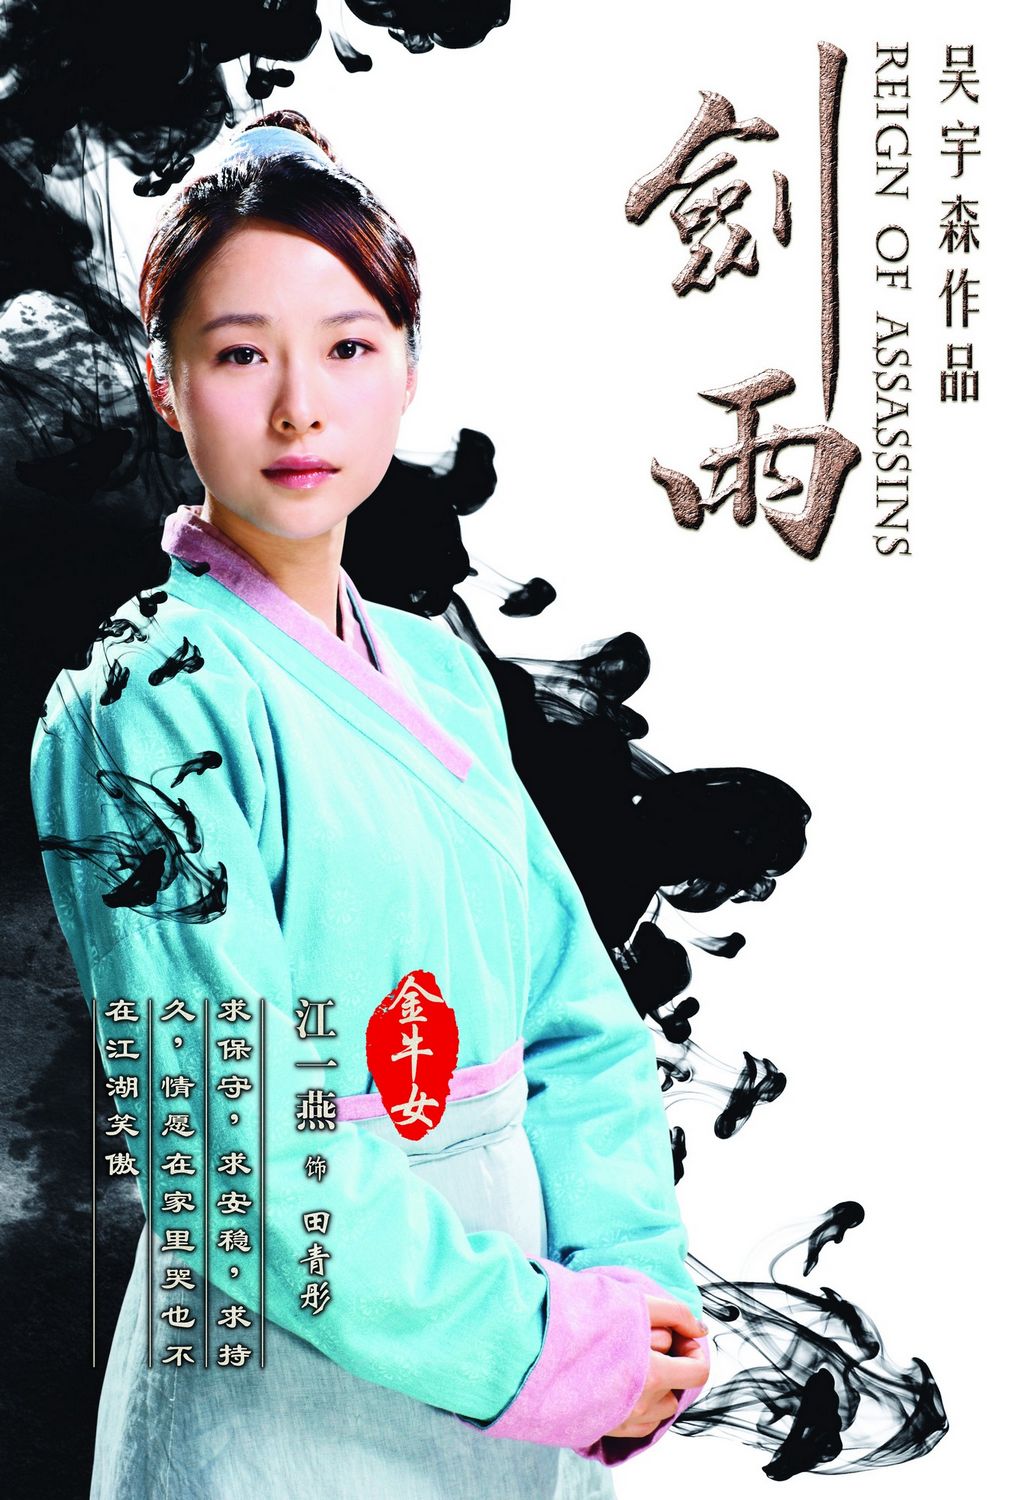 Extra Large Movie Poster Image for Jianyu (#6 of 11)